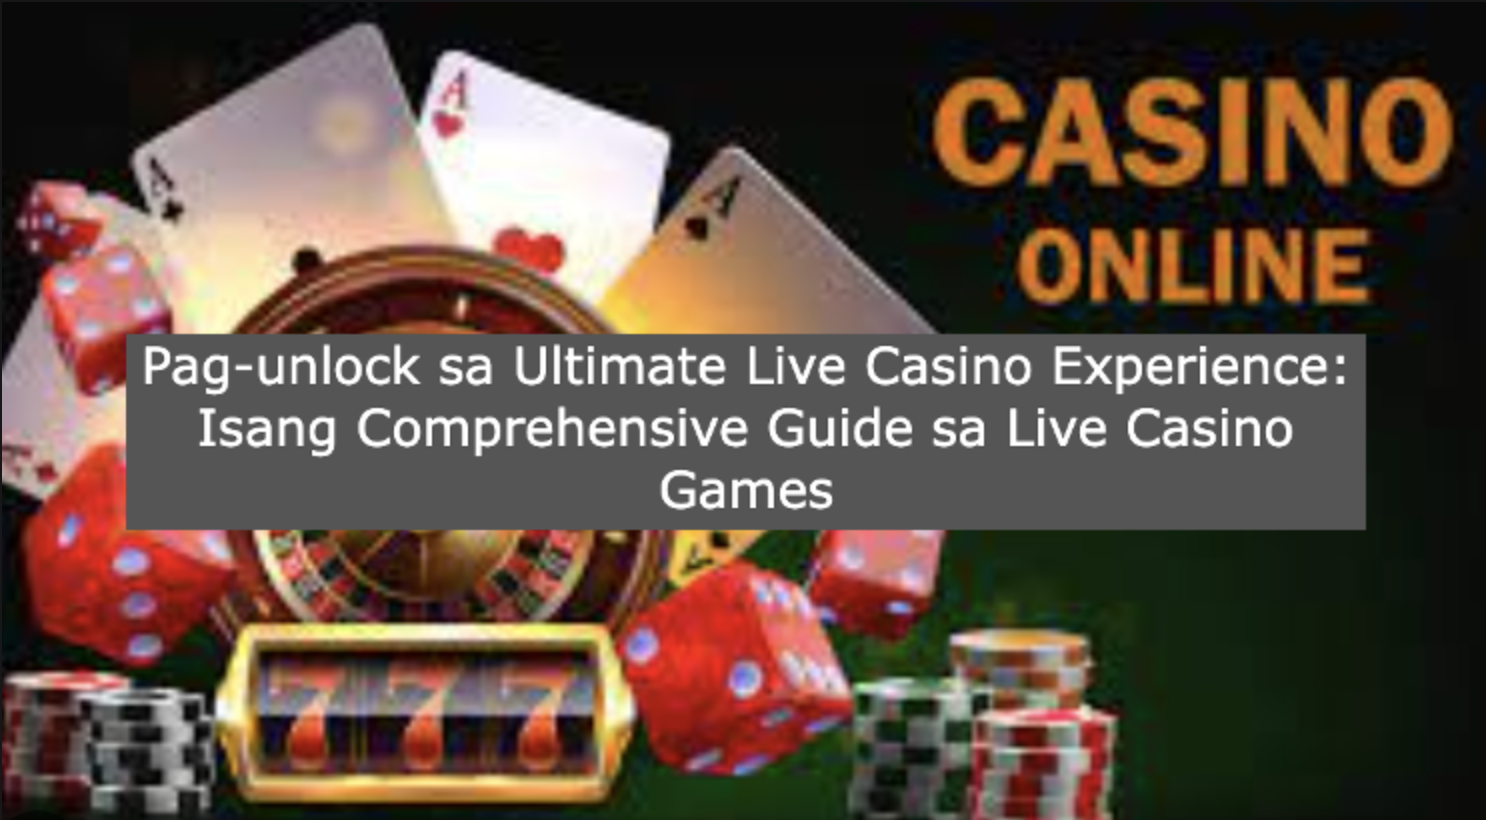 Pag-unlock sa Ultimate Live Casino Experience: Isang Comprehensive Guide sa Live Casino Games